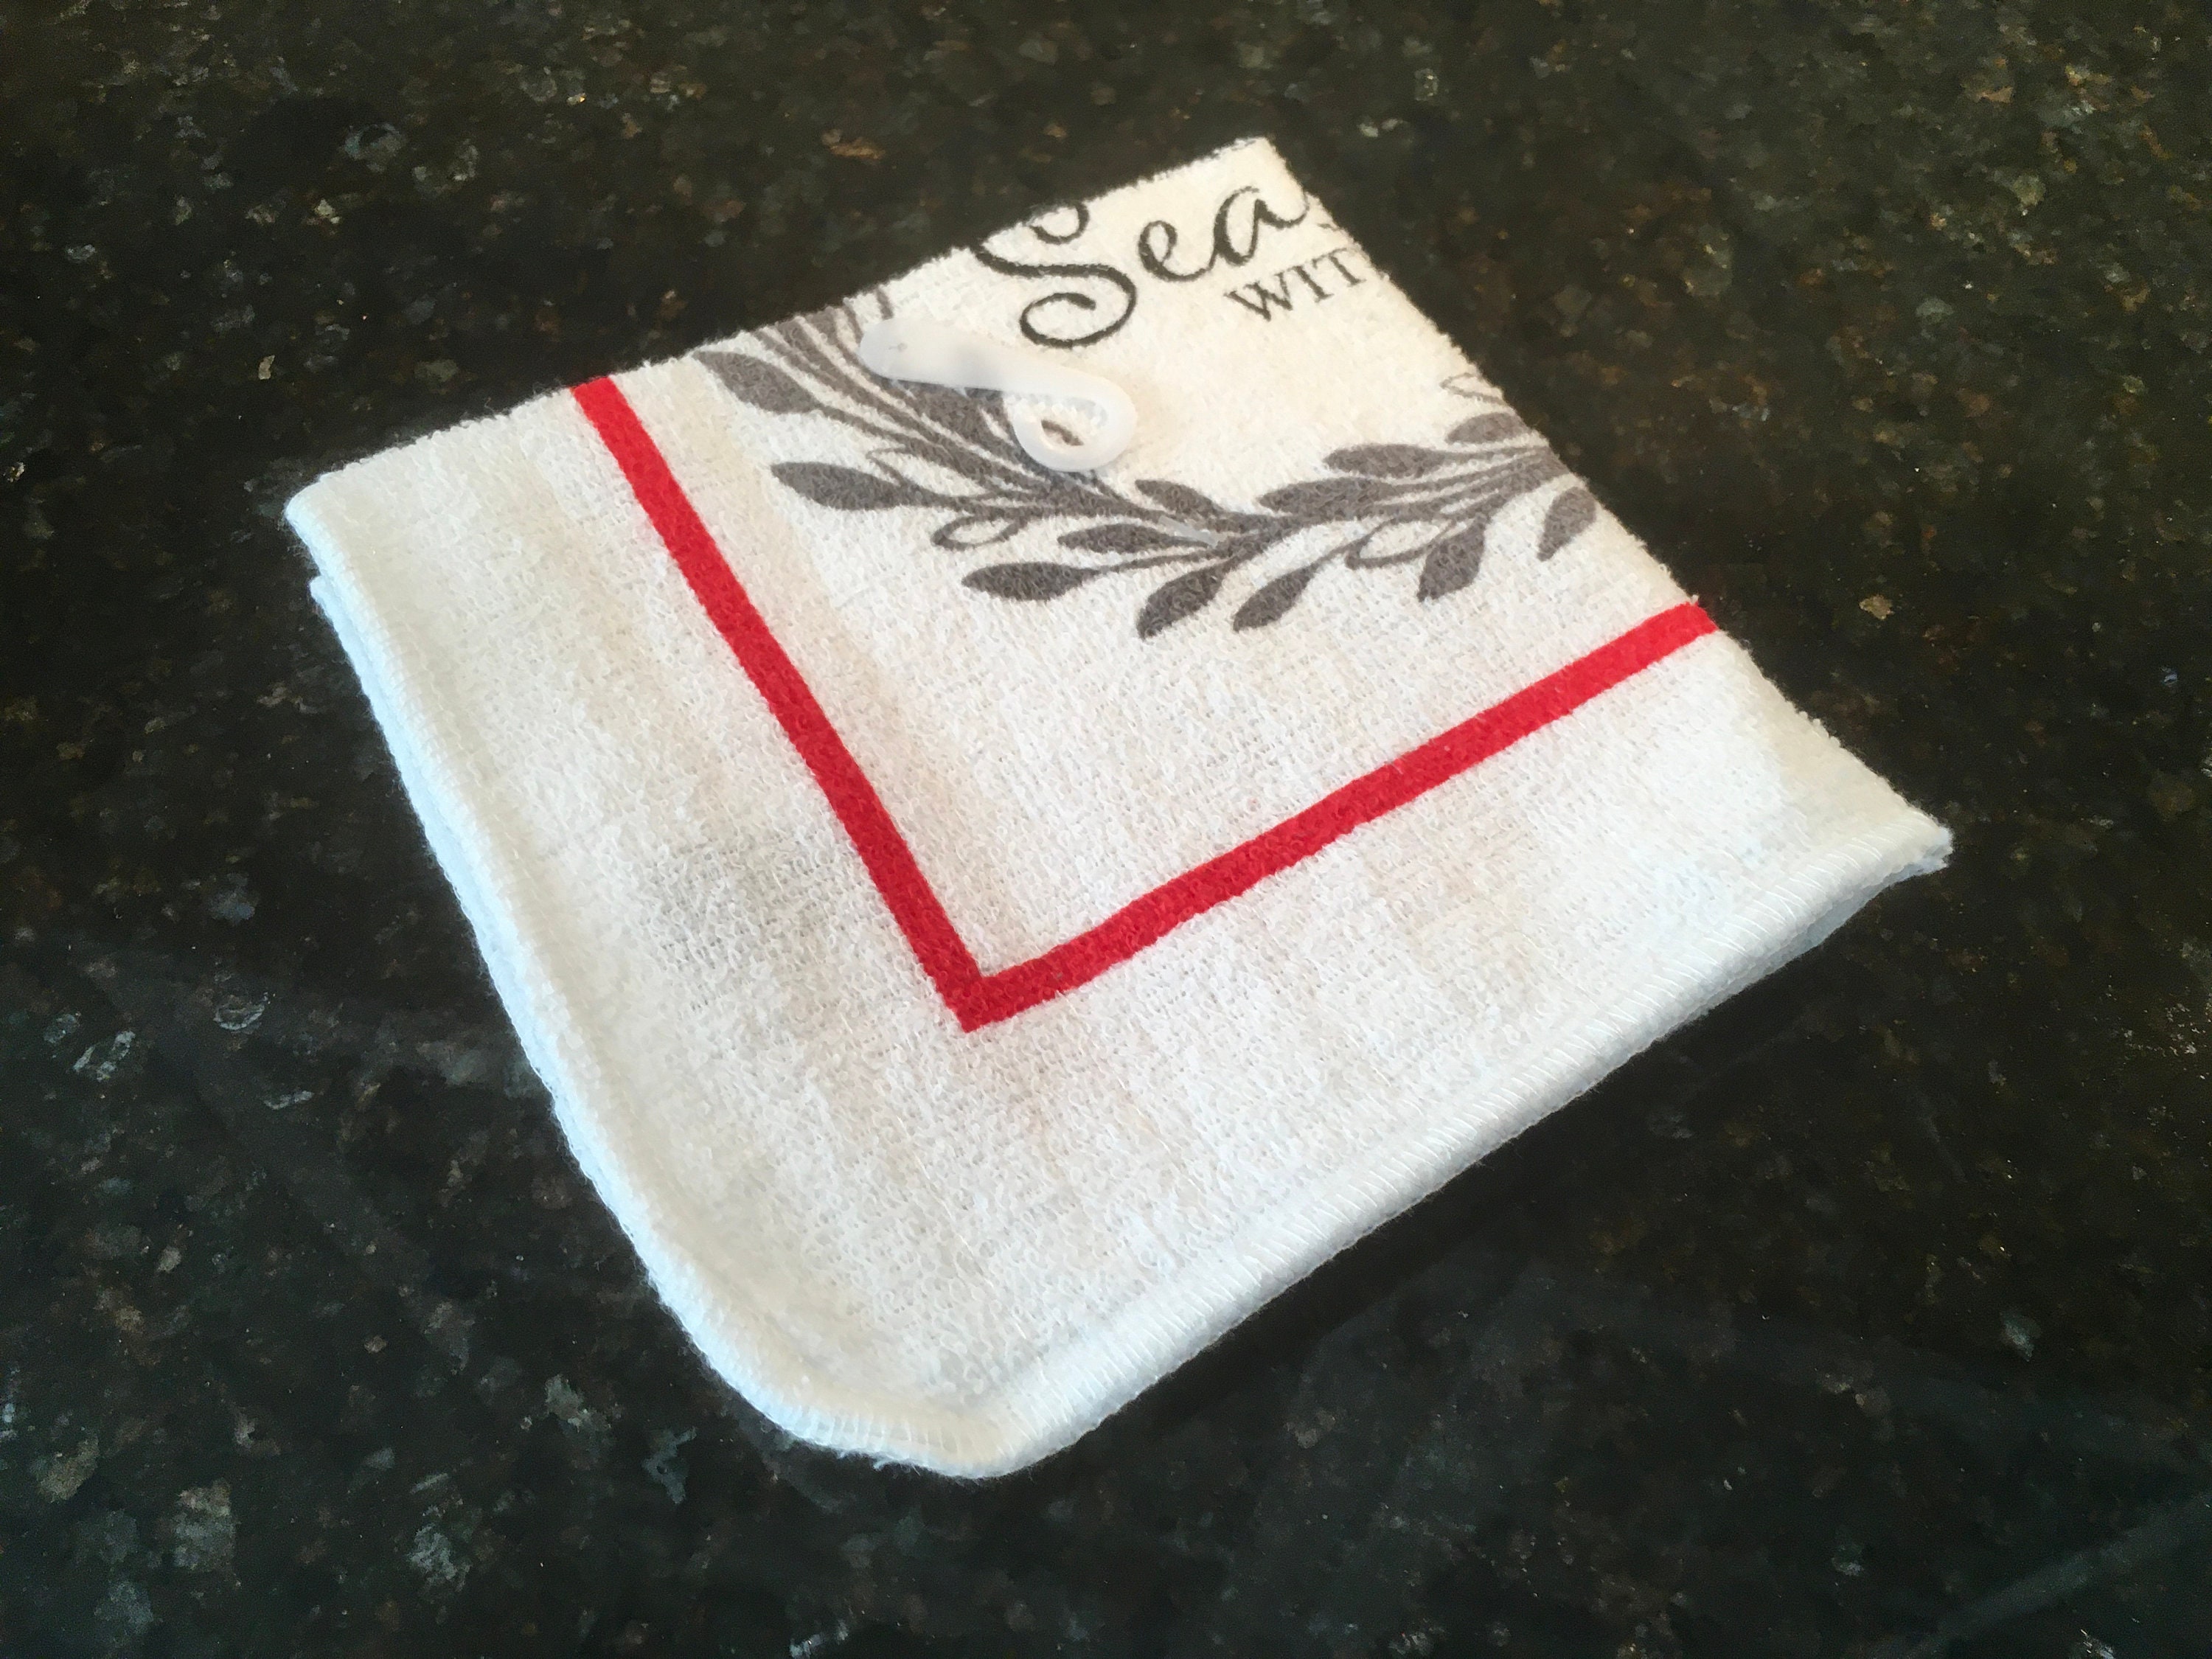 Handmade Kitchen Towel Set, Nicole Miller Dish Towels, Matching 4 Piece Towel  Set, Dish Towels and Rags 